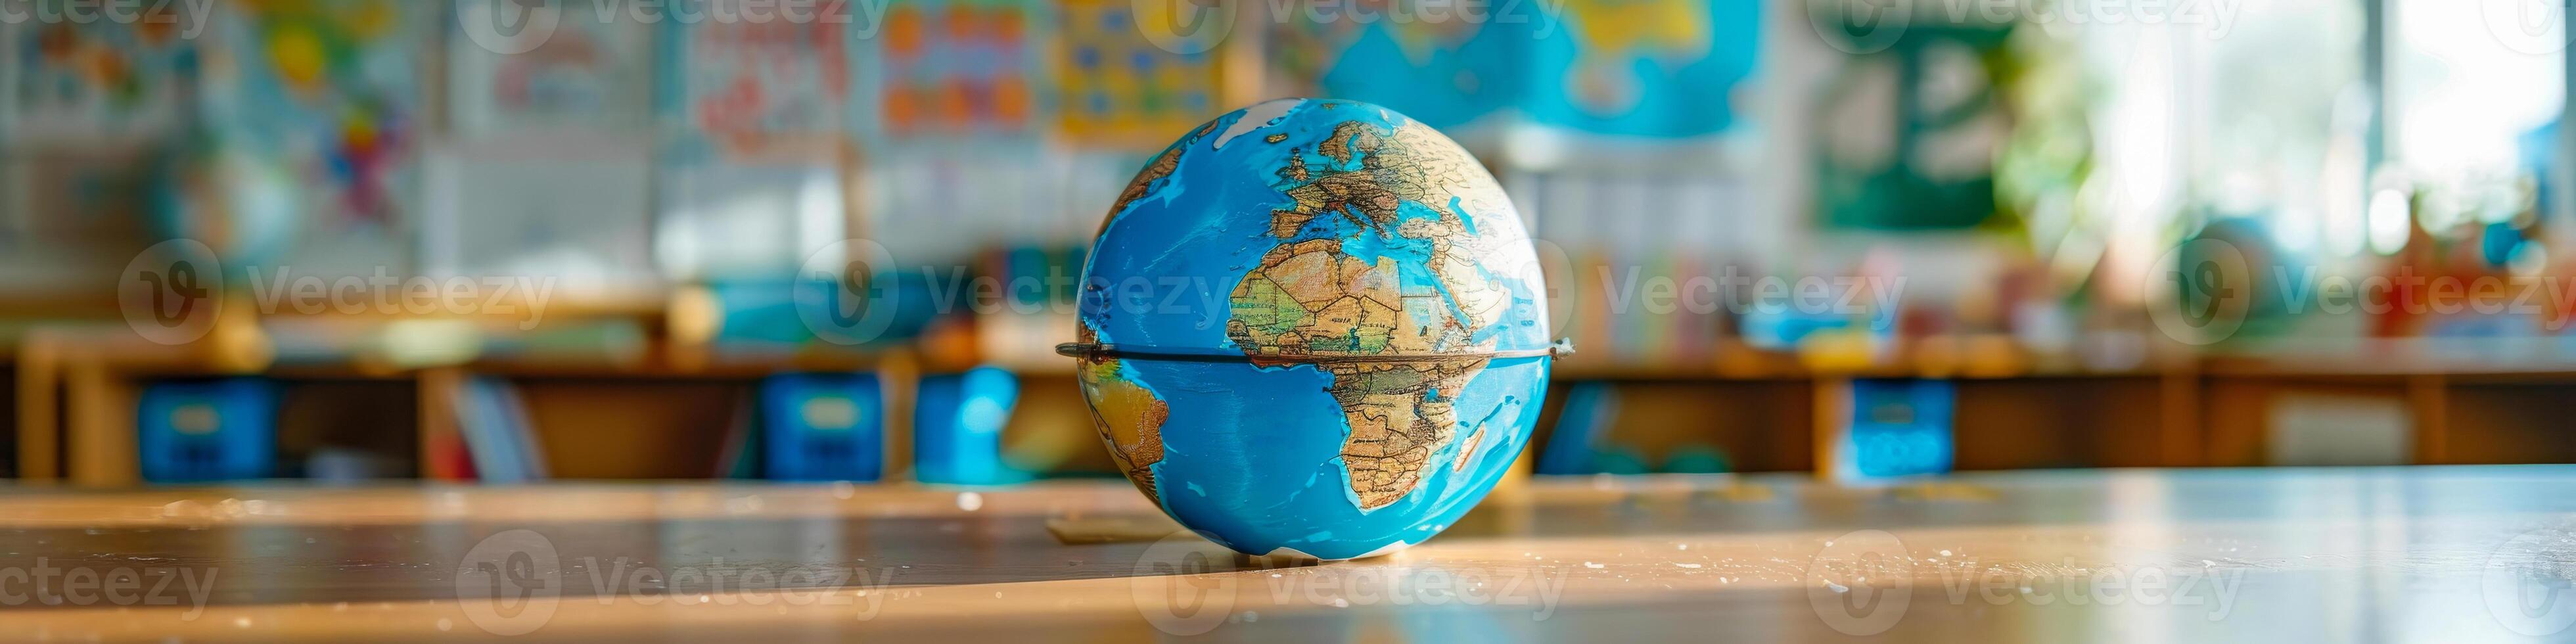 Educational Globe in a Bright Classroom Setting photo